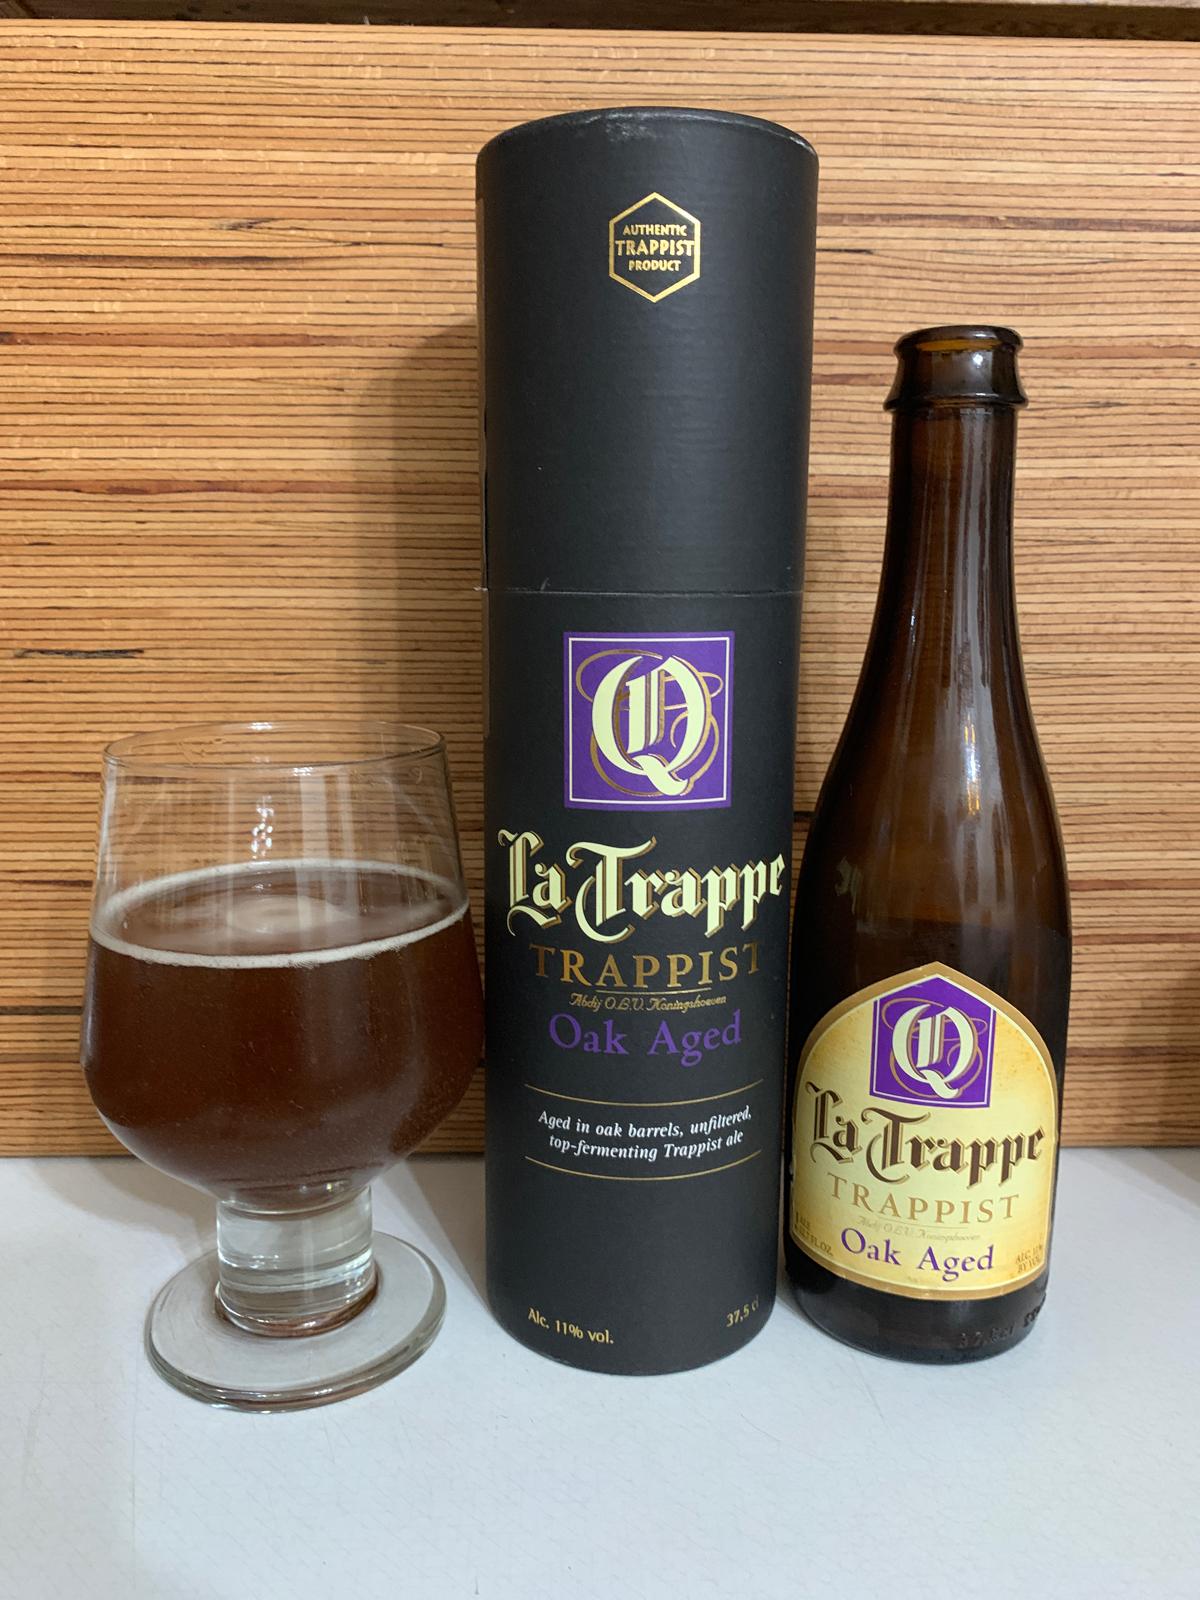 La Trappe Isid’or Oak Aged Trappist Ale